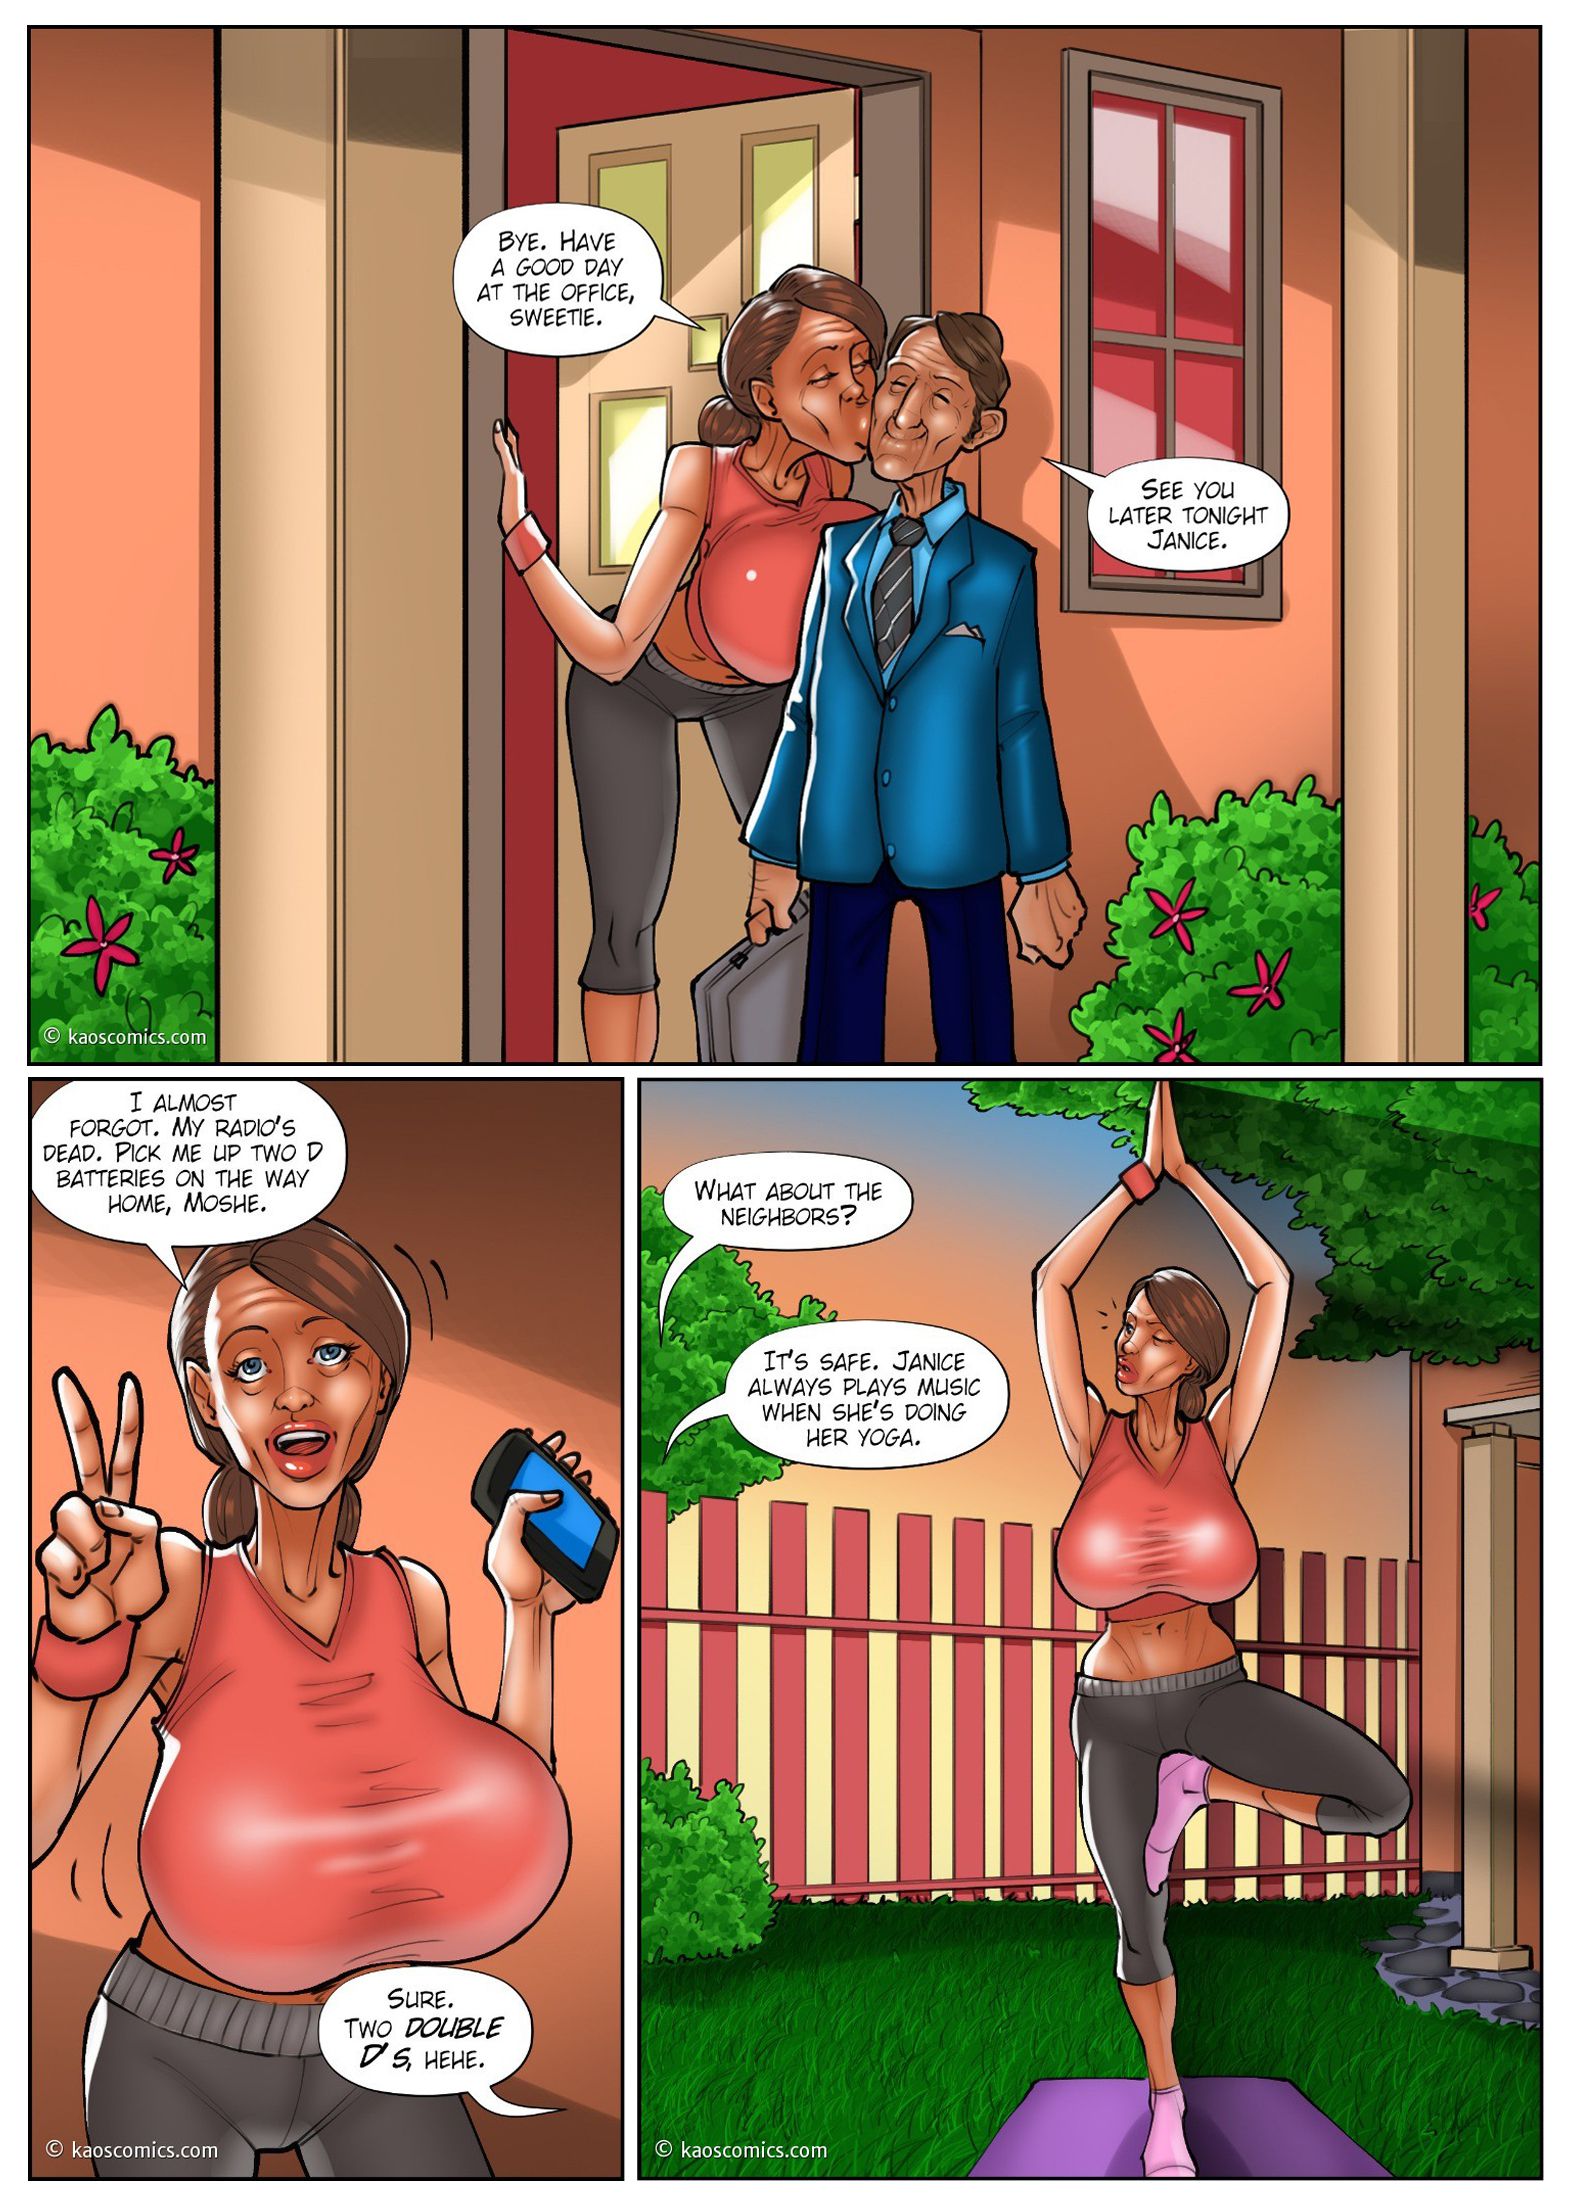 The Wife And The Black Gardeners KAOS Comics - 3 